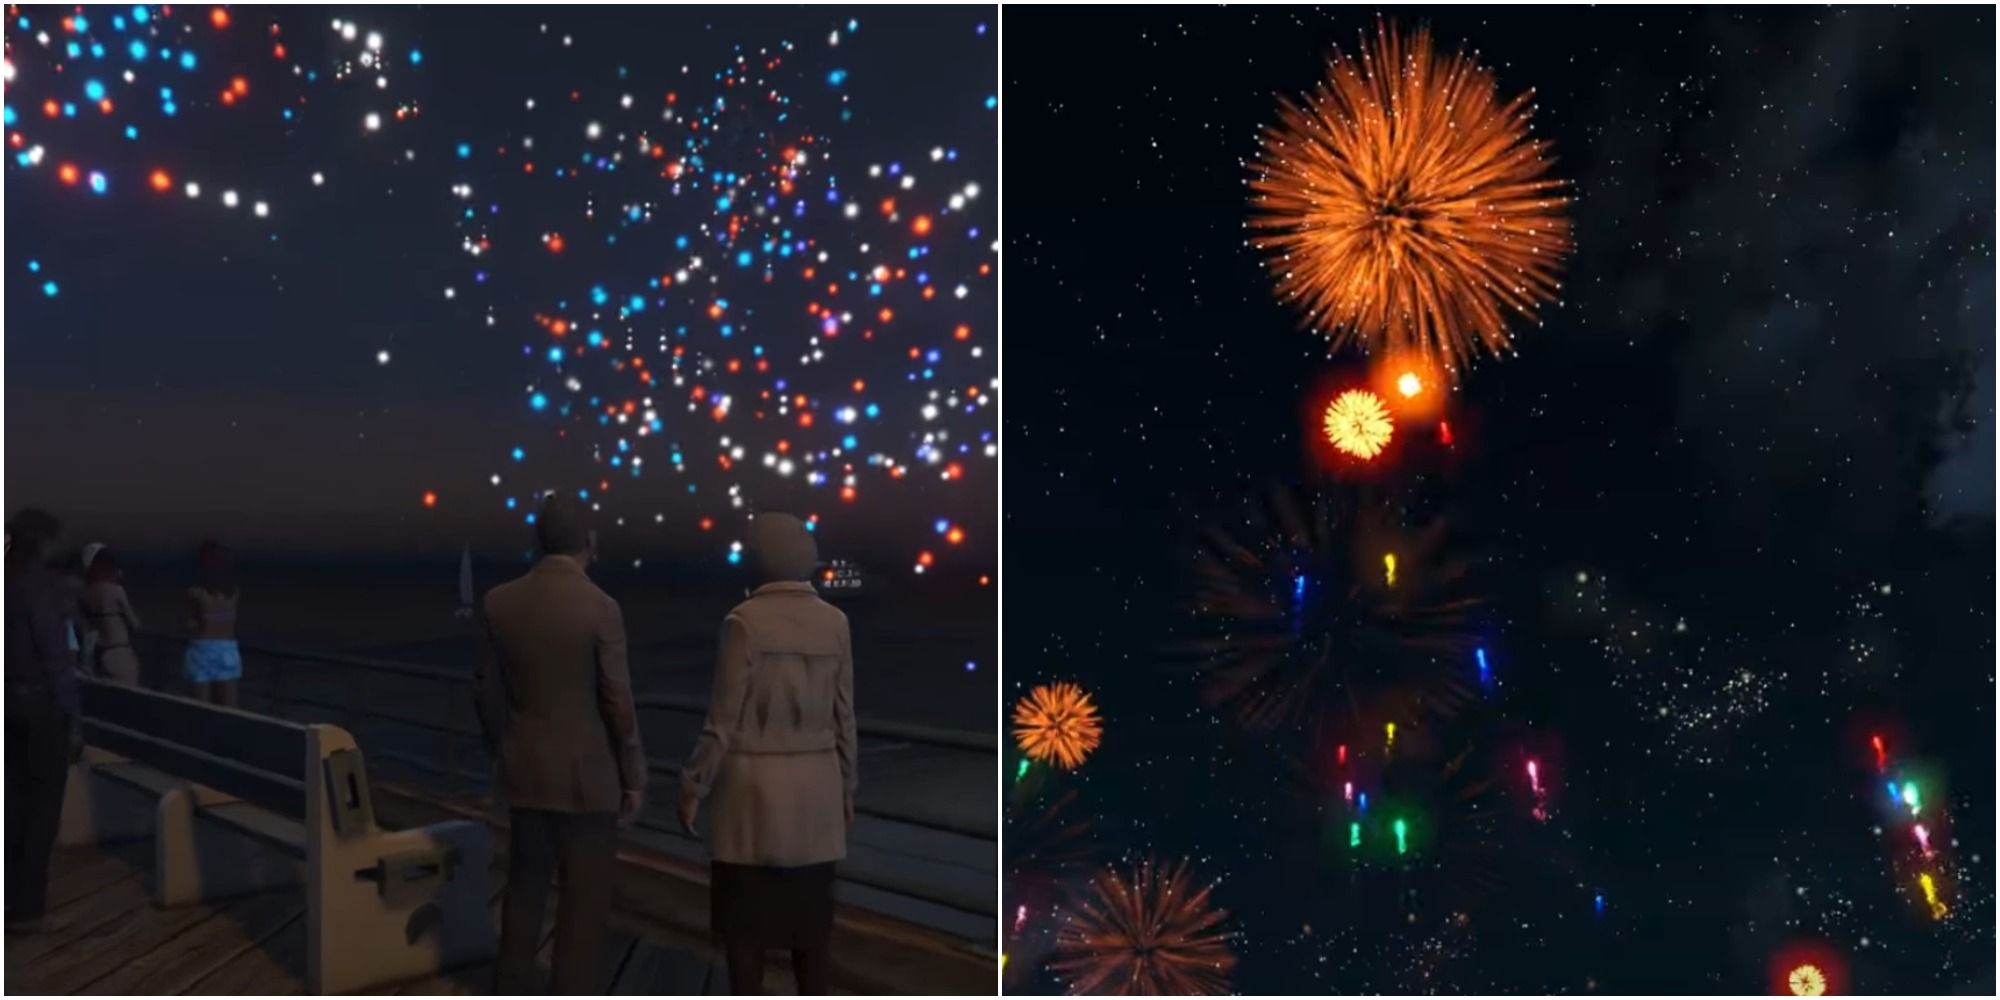 Jogo Flashy Fireworks no Jogos 360